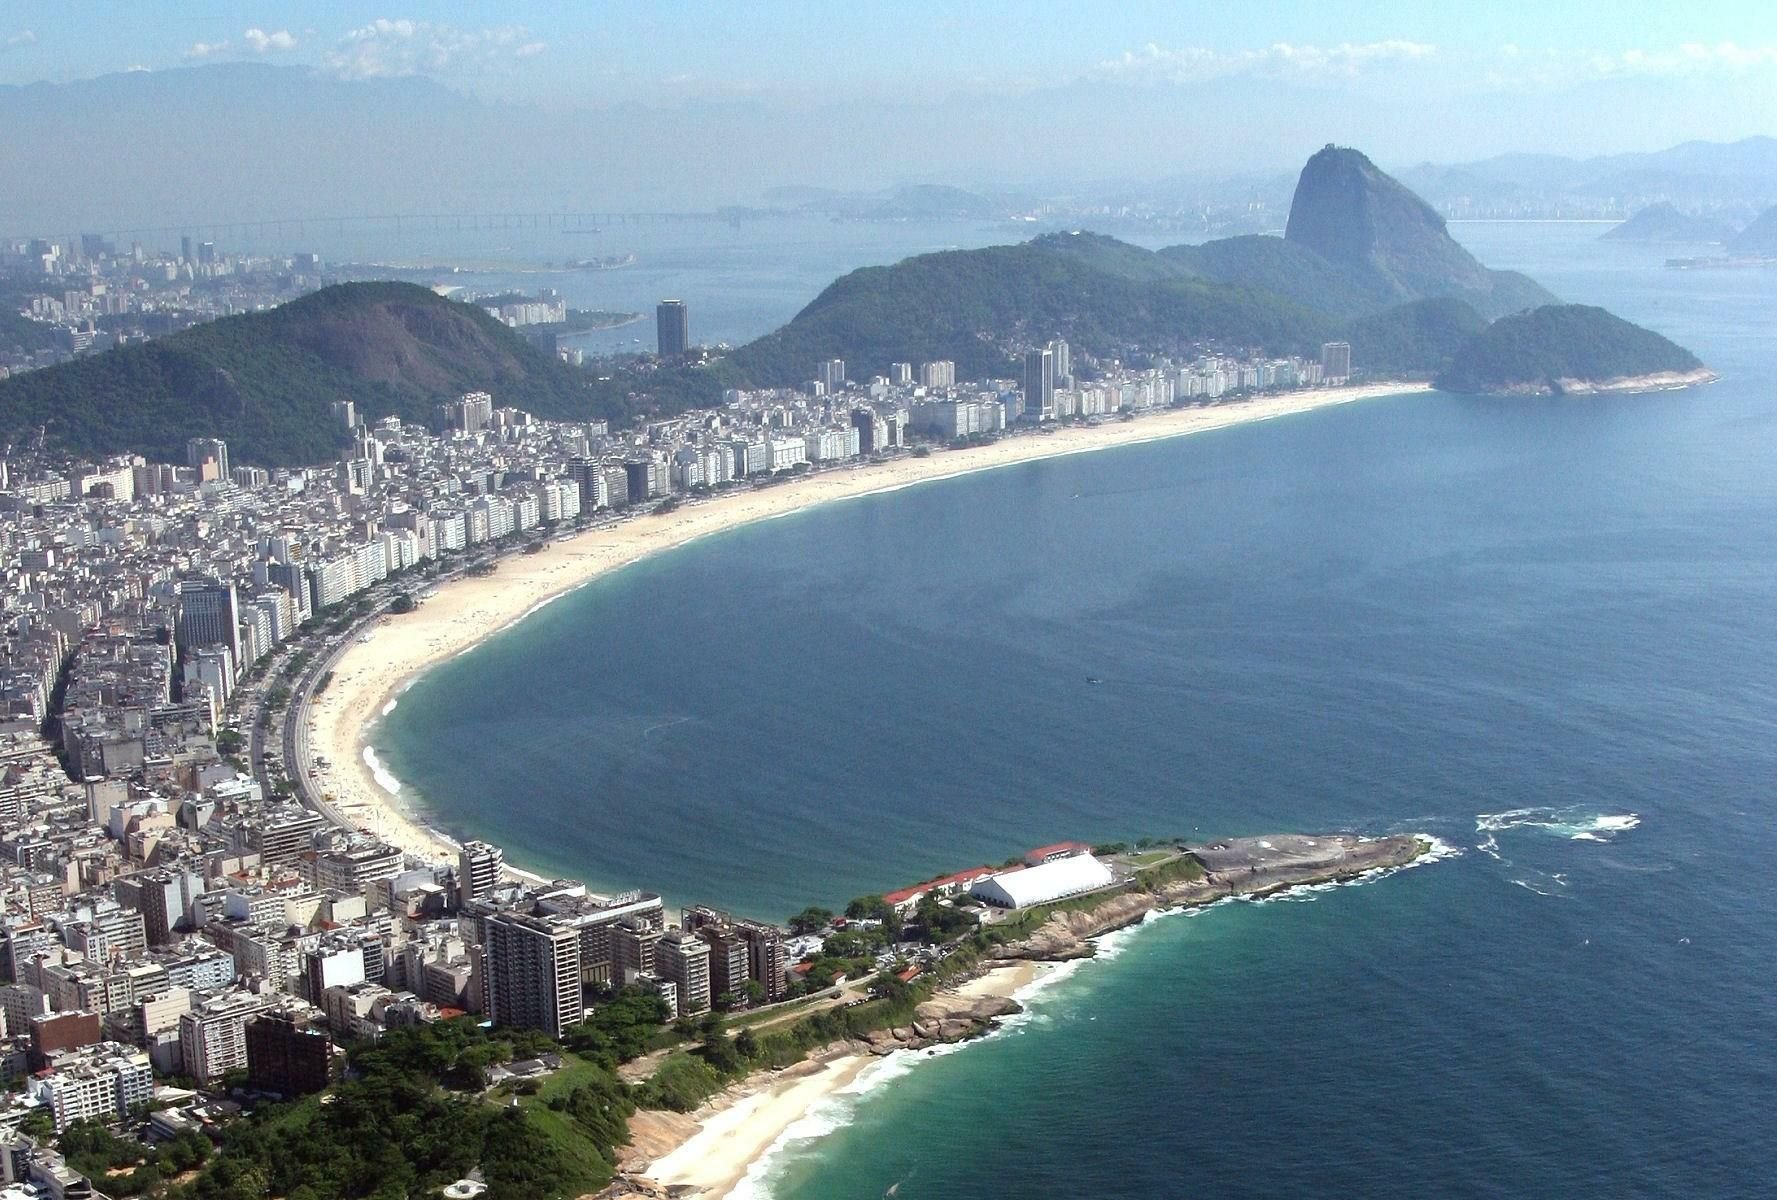 Какой океан омывает бразилию